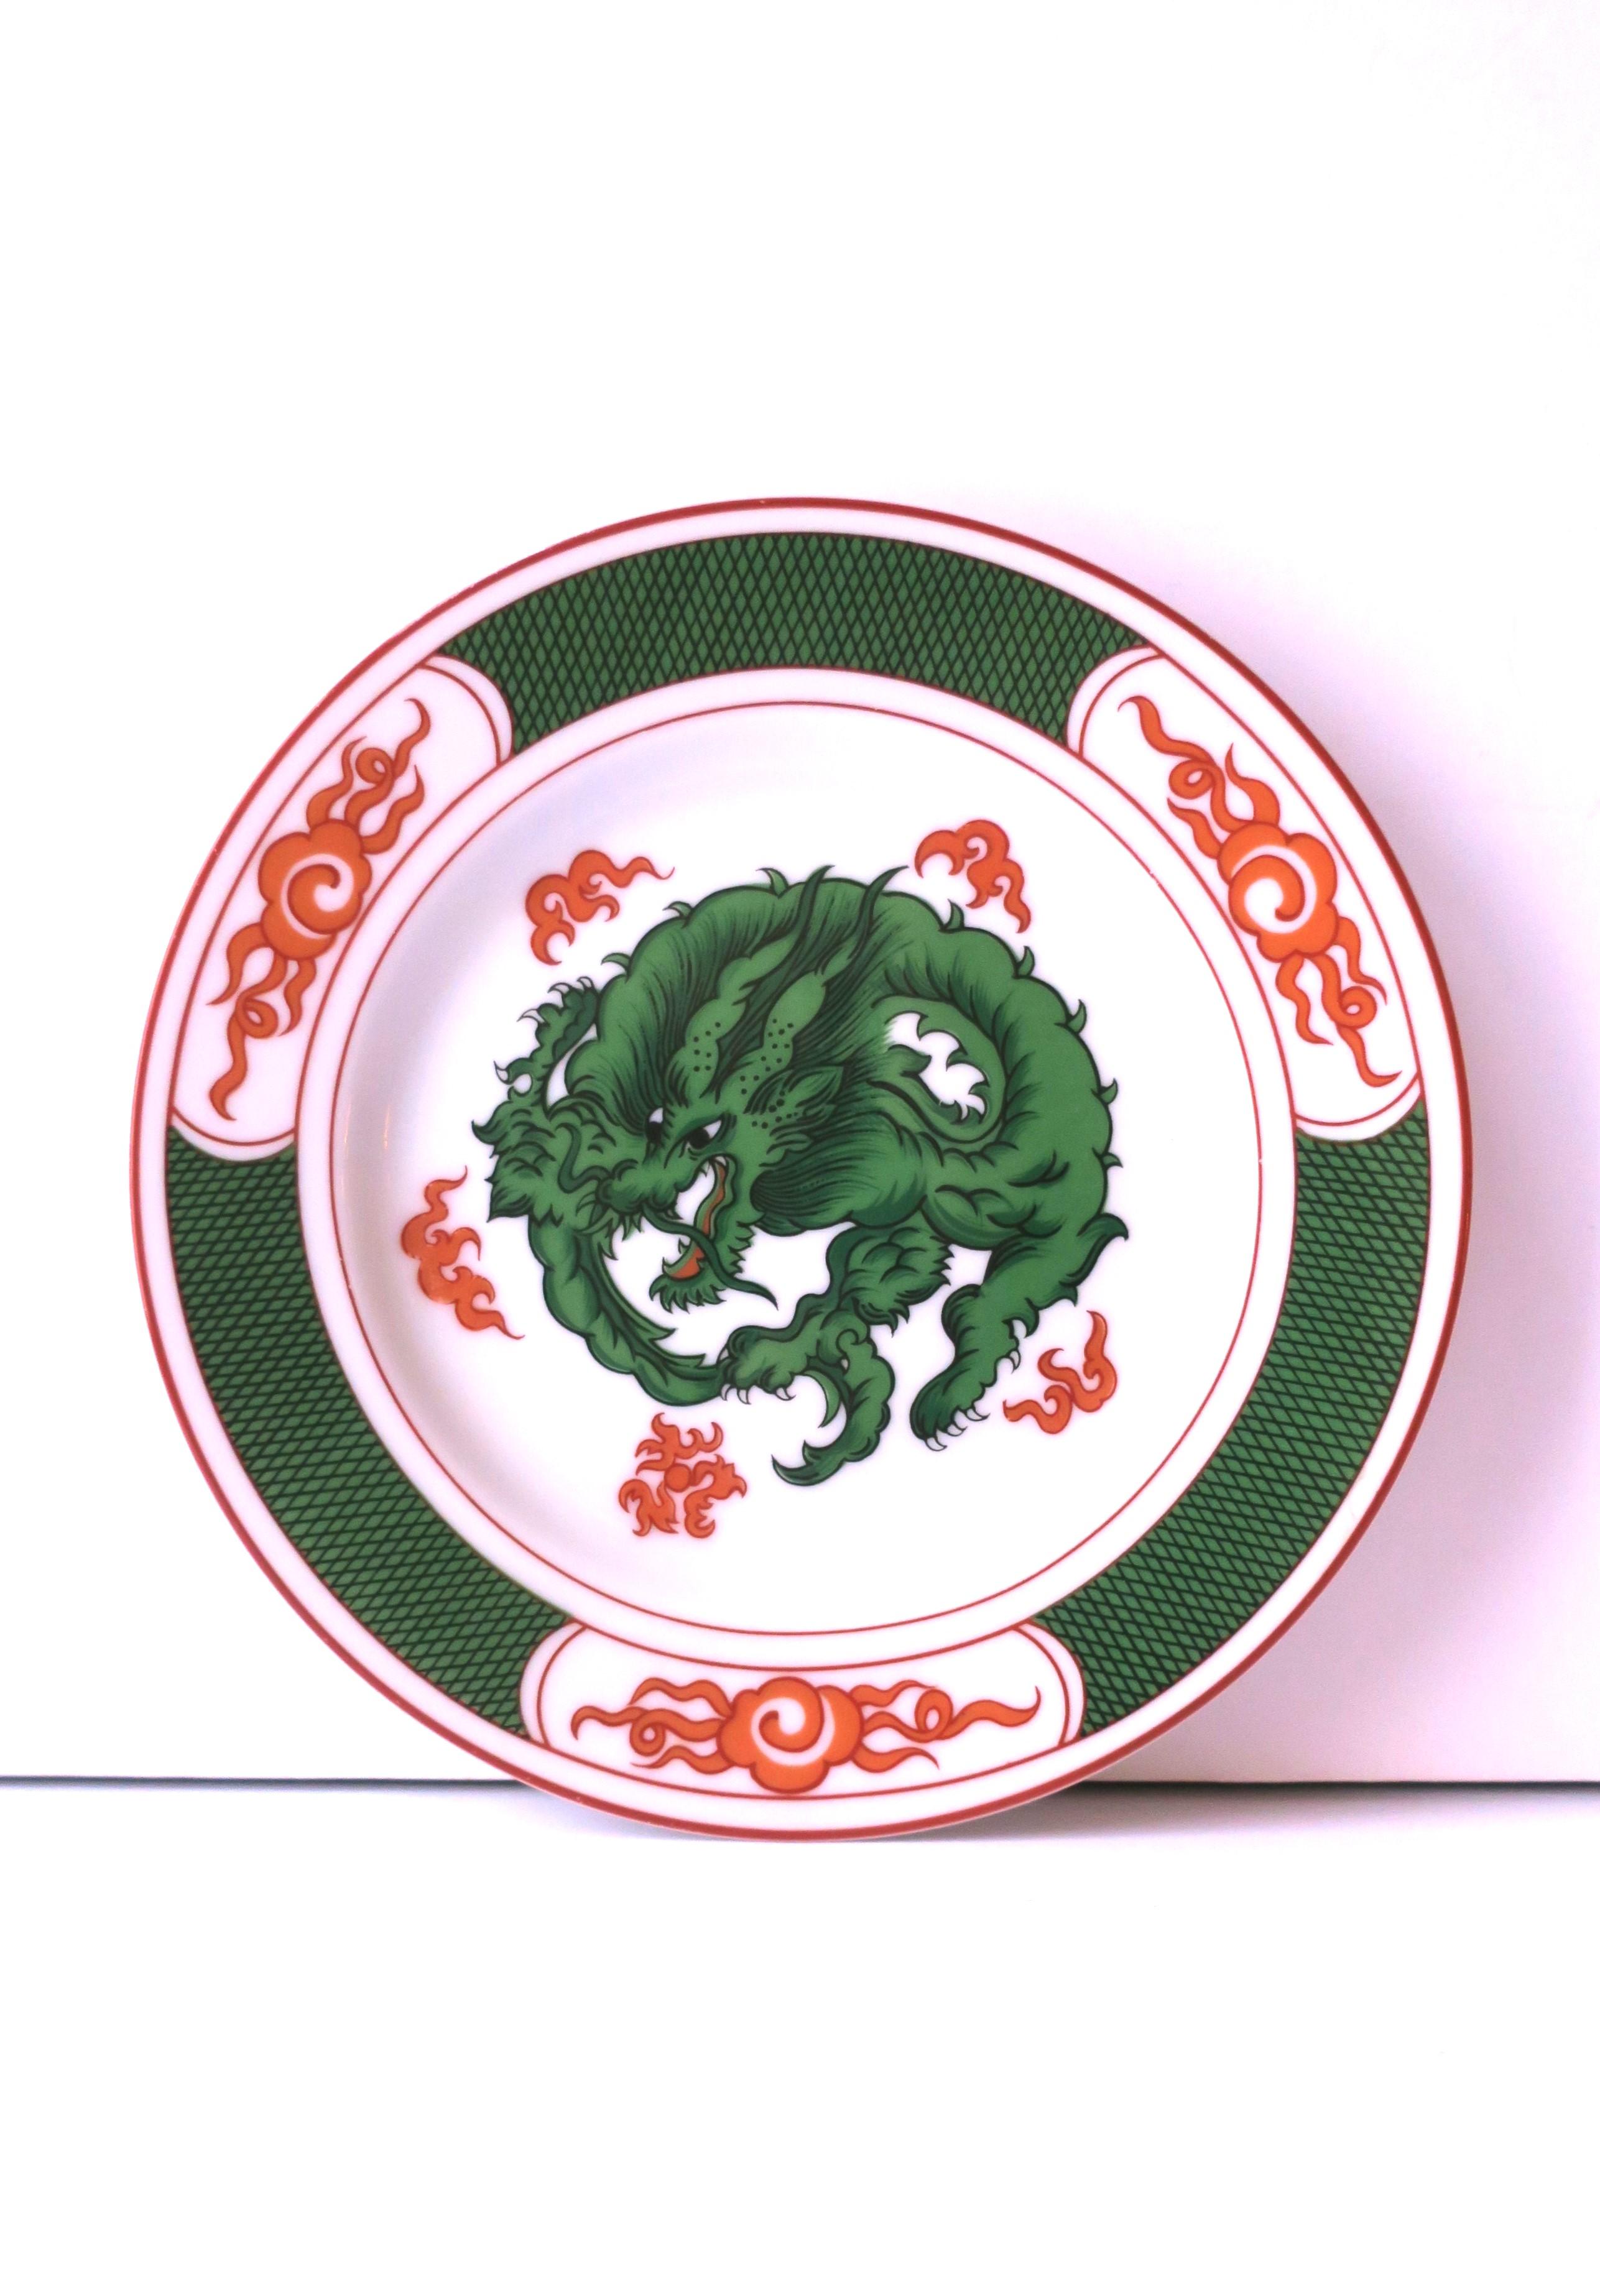 Porcelain Plates with Dragon Design, Set of 2 For Sale 1